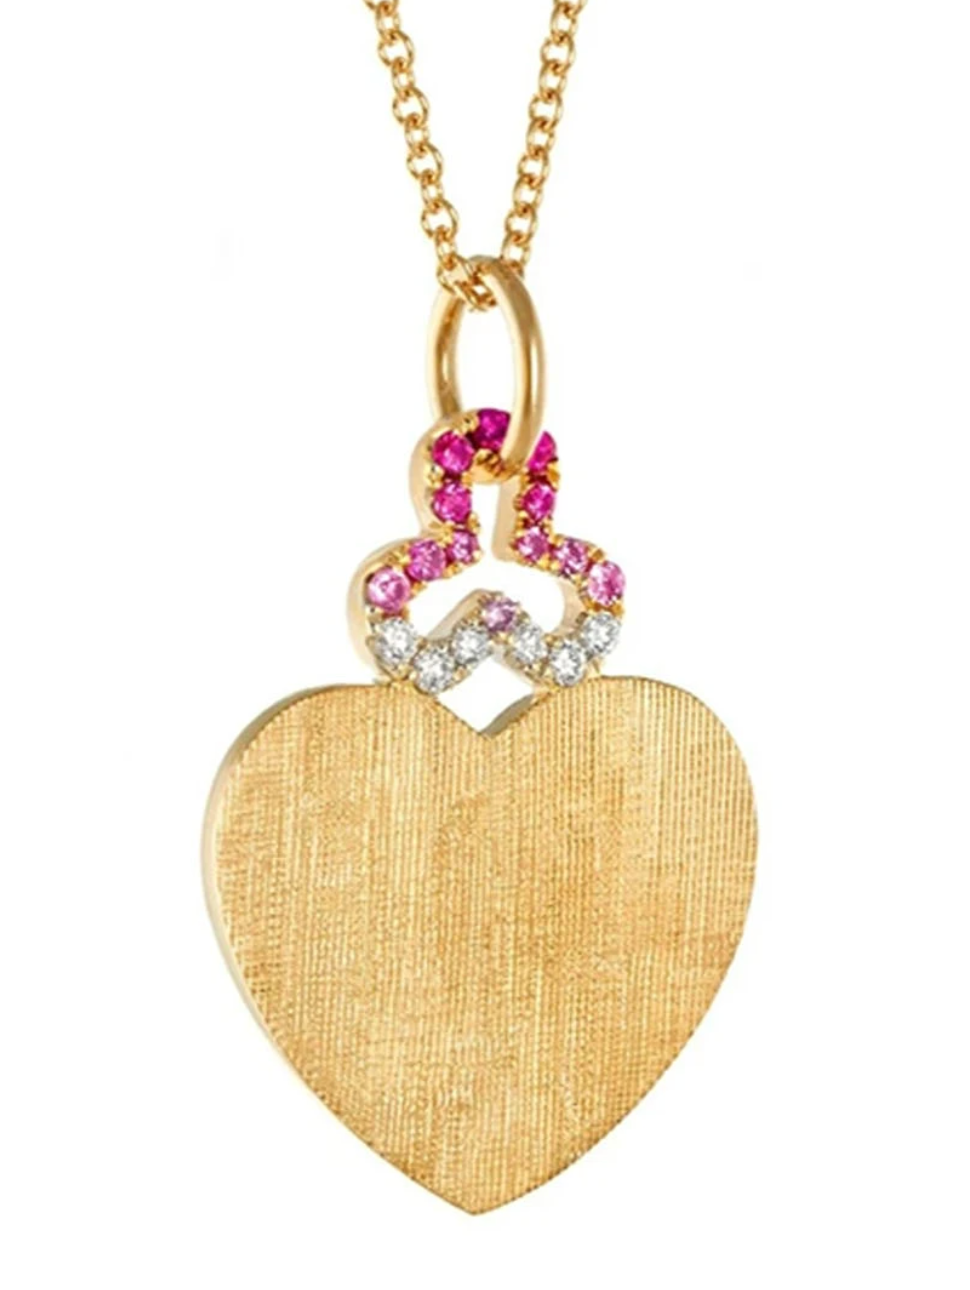 Pink Ombre Hidden Heart Charm in 18k Gold Florentine